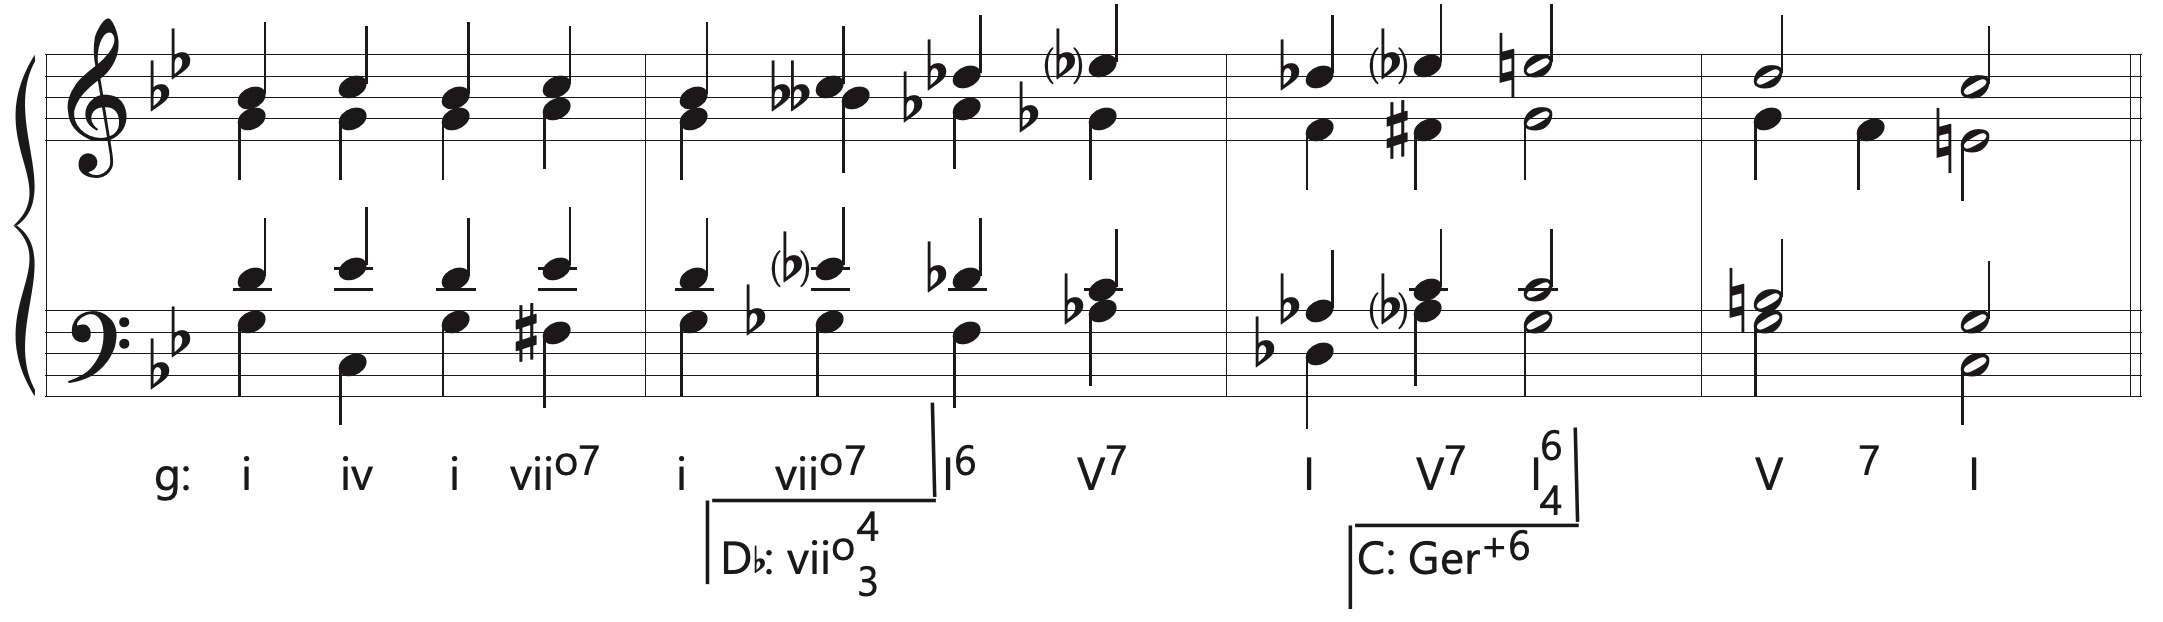 enharmonic modulation progression